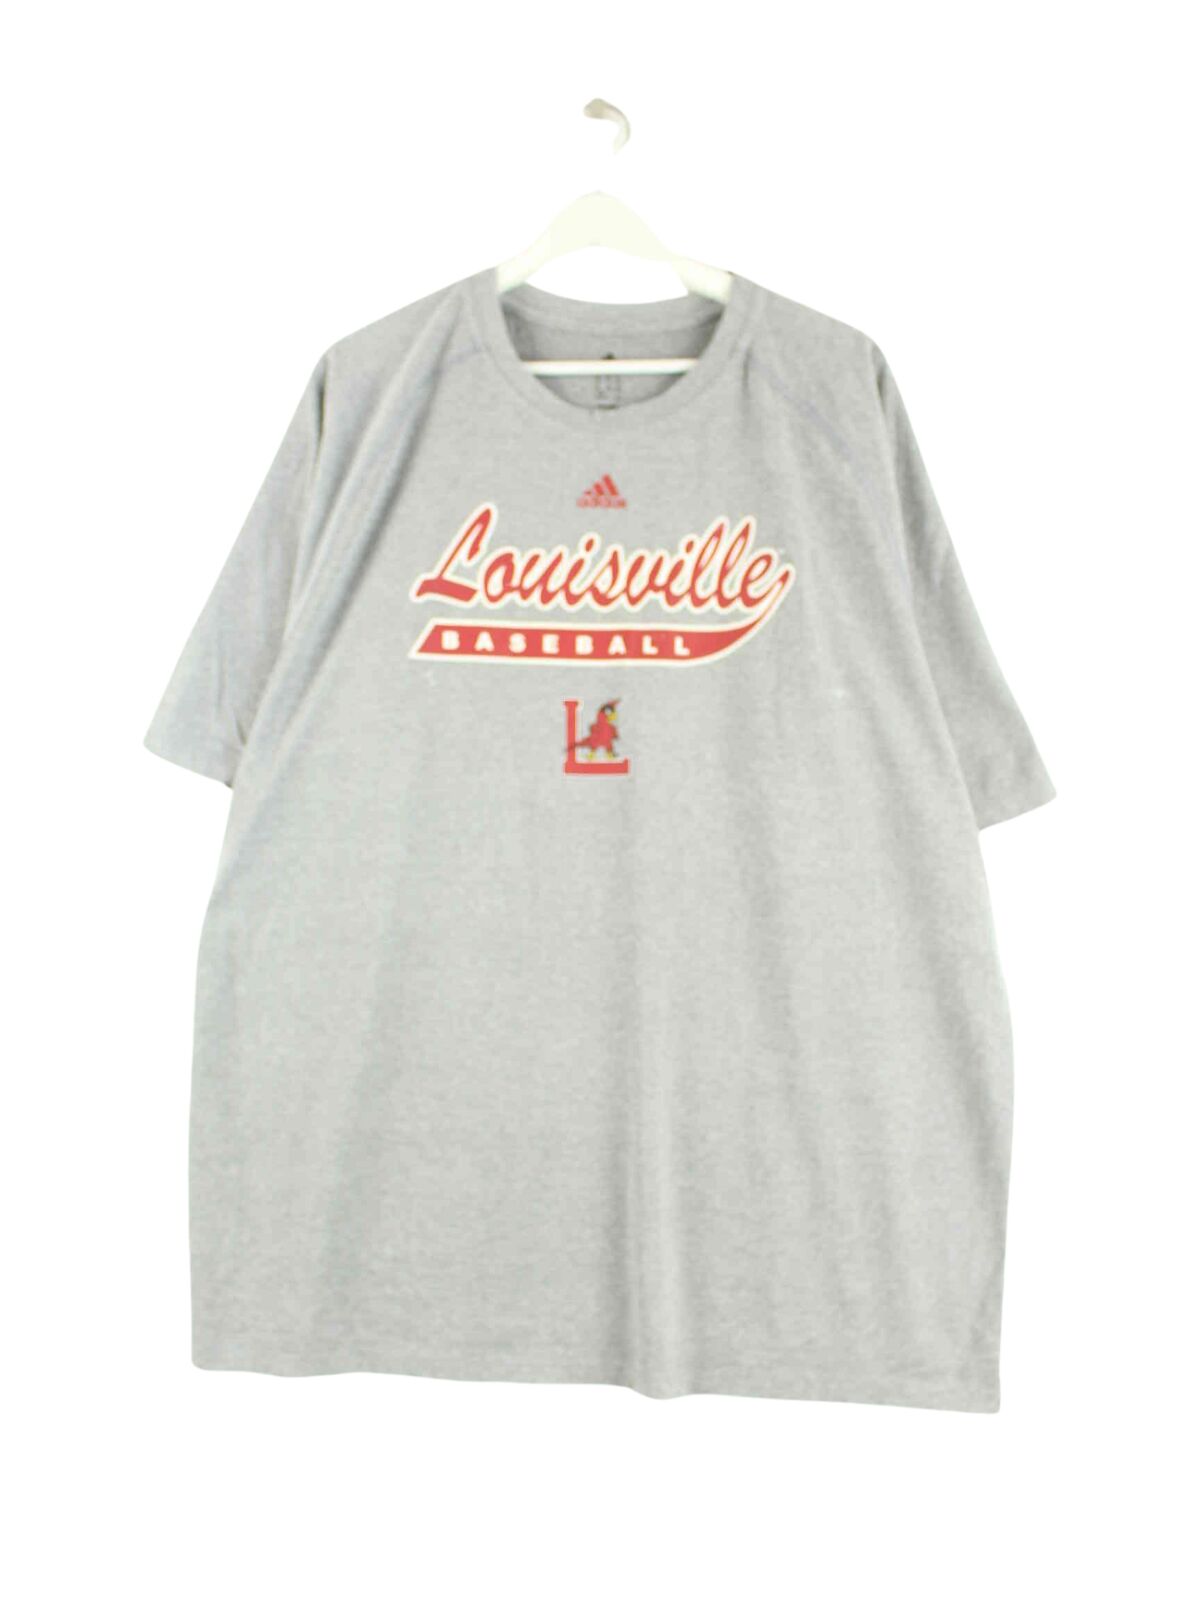 Adidas Louisville Print T-Shirt Grau XXL (front image)